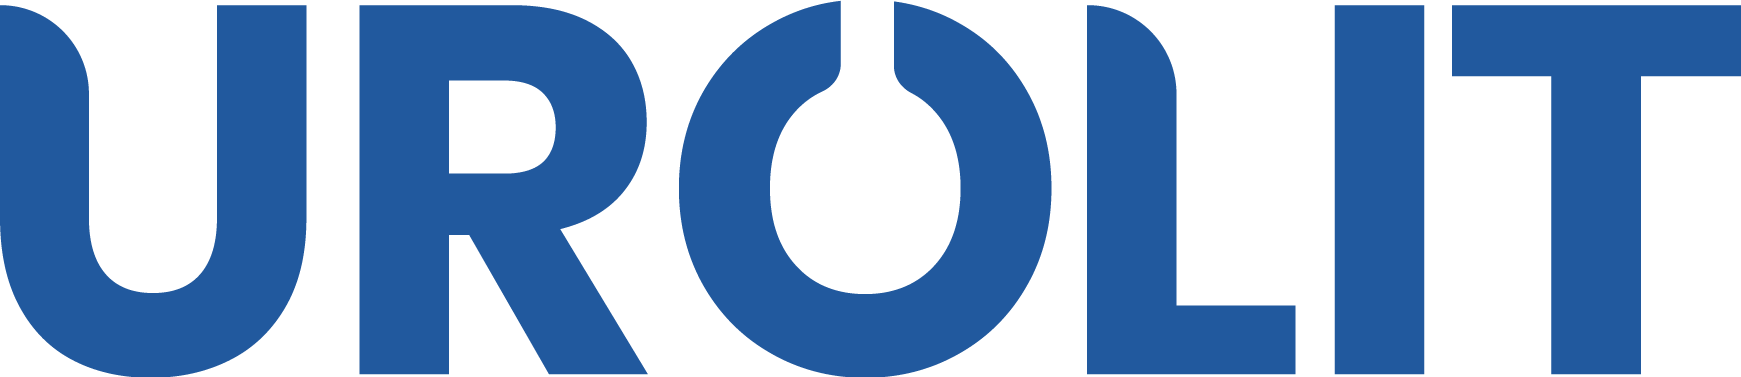 Logotipo Urolit Londrina